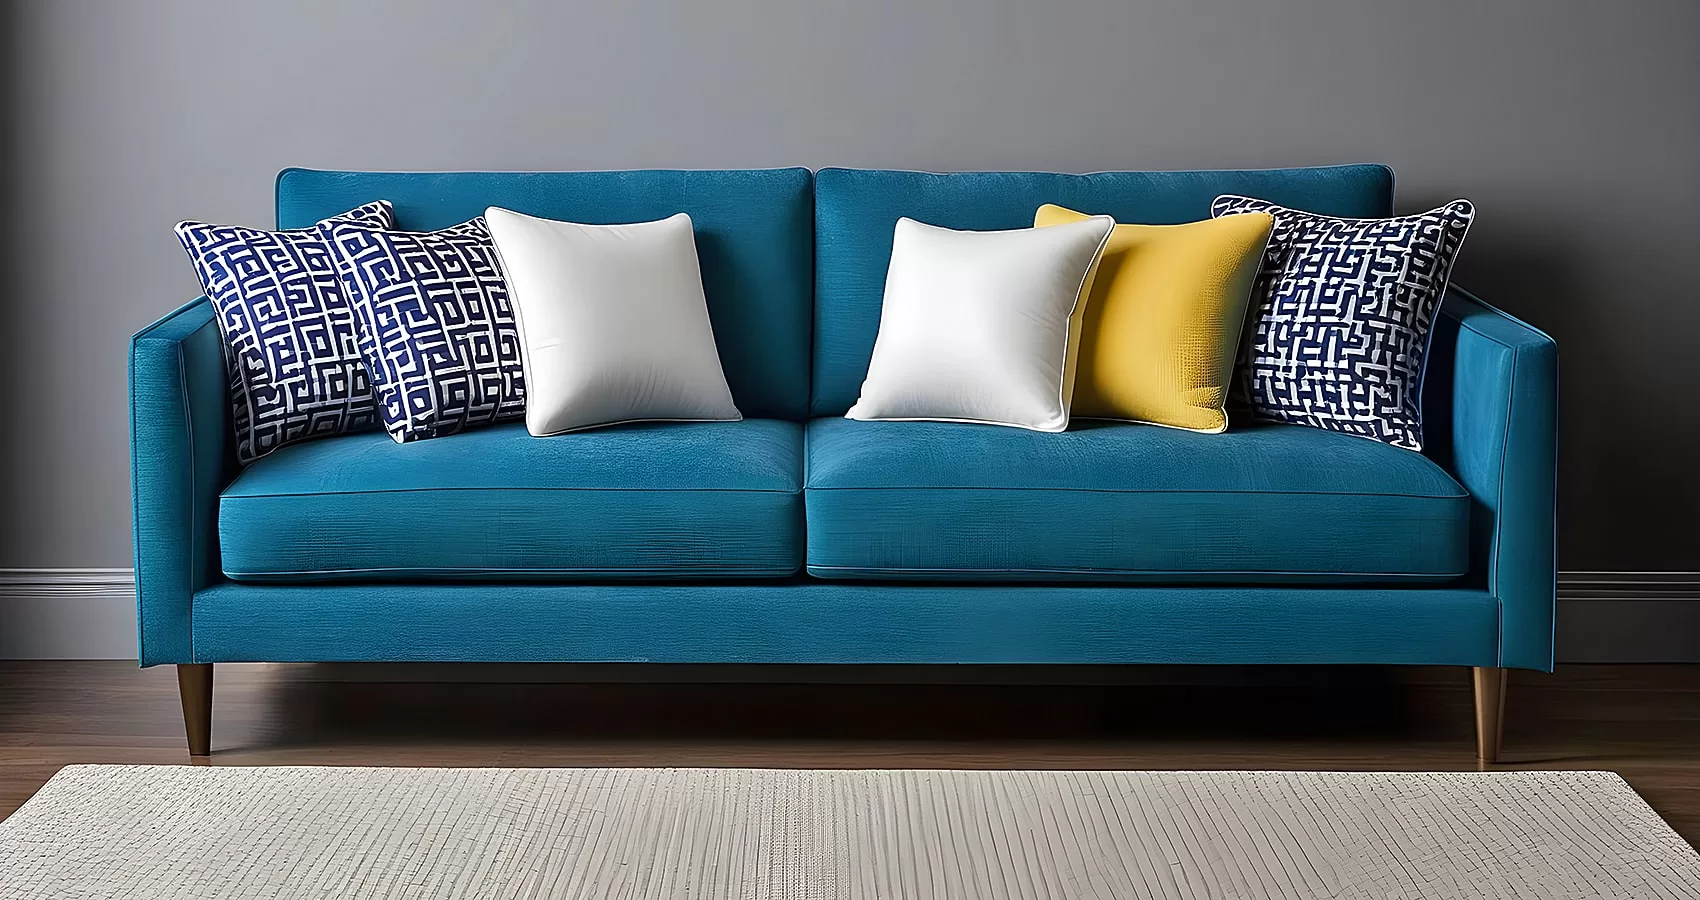 Blue Couch Pillows | Blue Couch Cushions | Blue Sofa Pillows